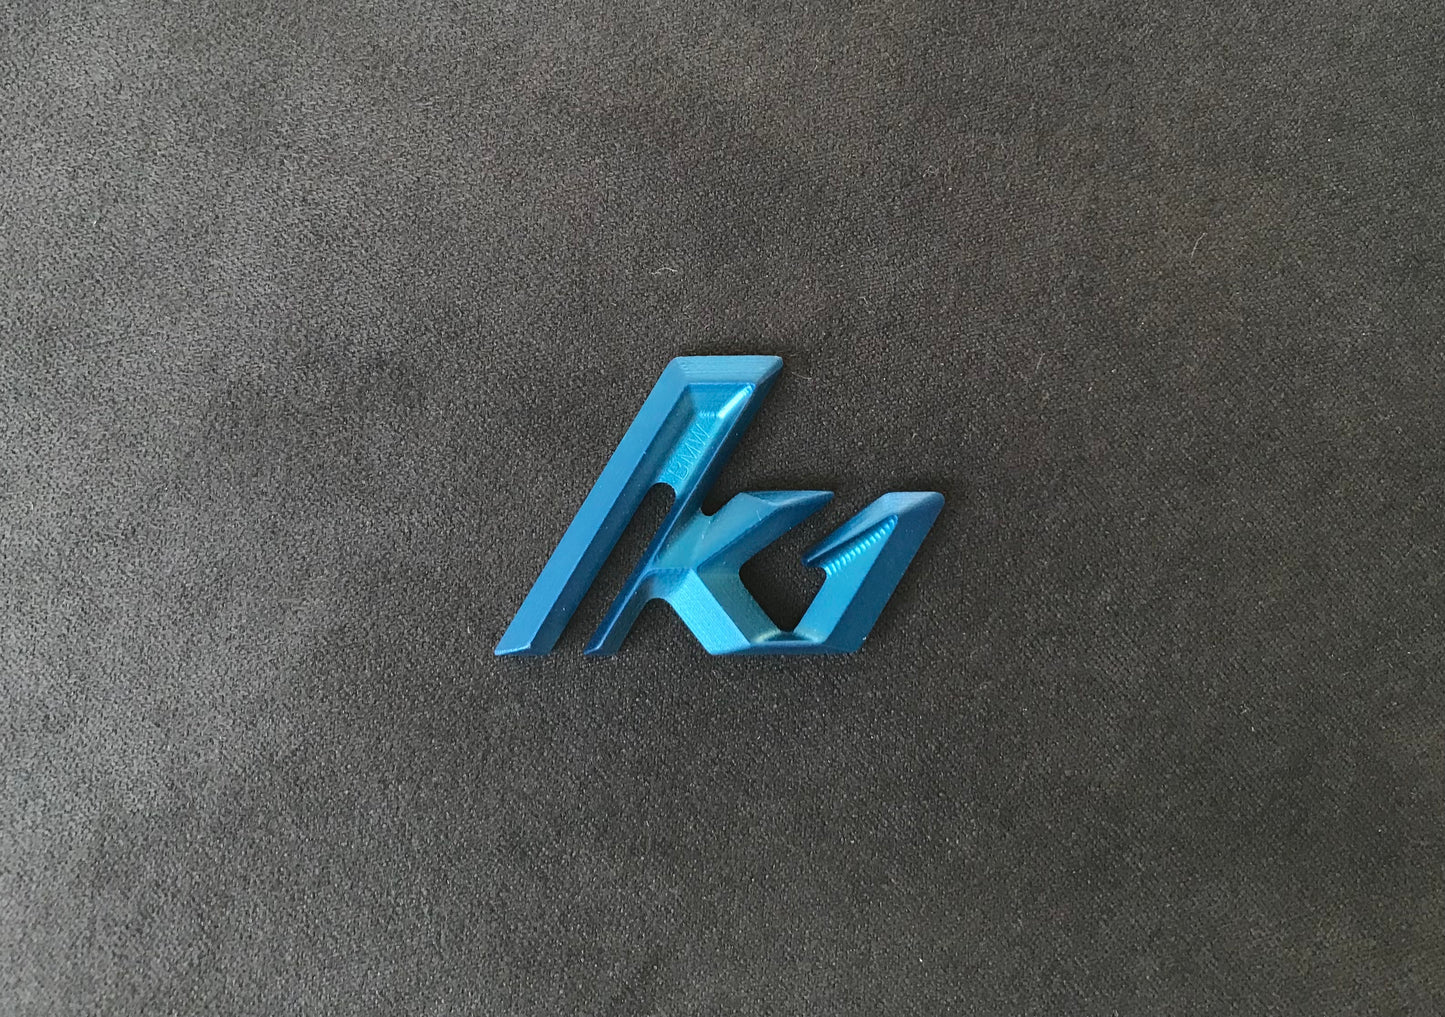 3D K1 Badge